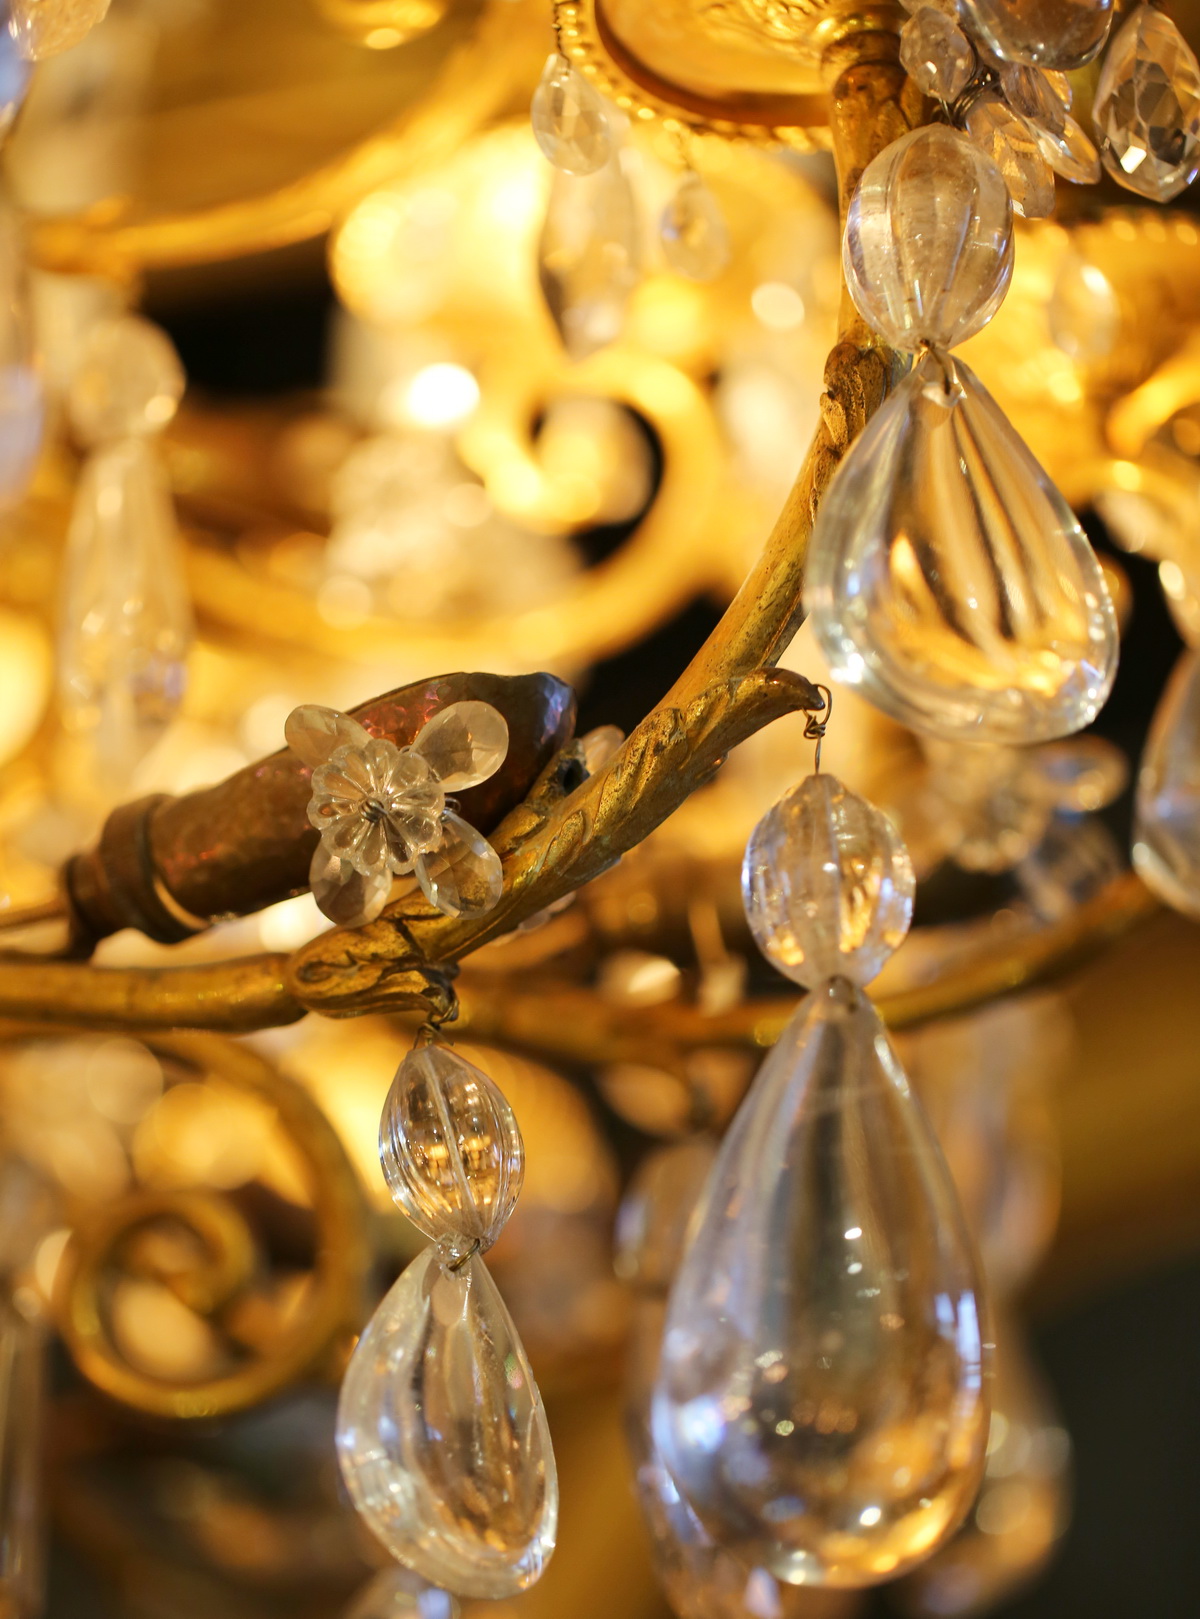 Bronze chandelier and rock crystals circa 1800